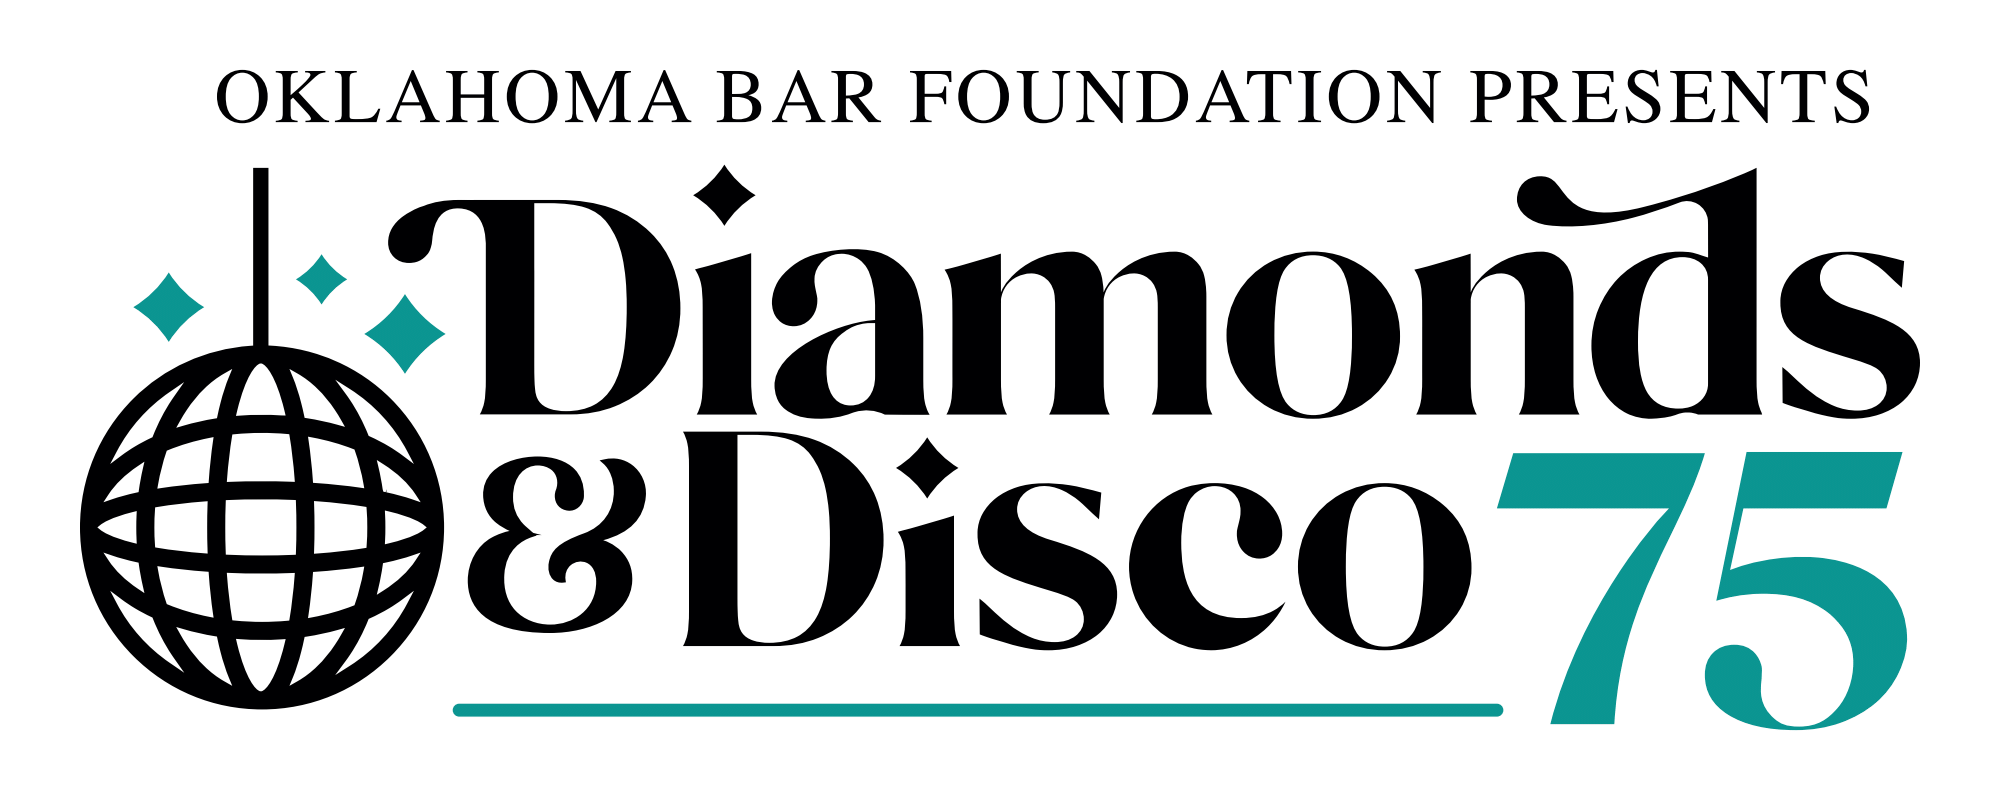 Oklahoma Bar Foundation